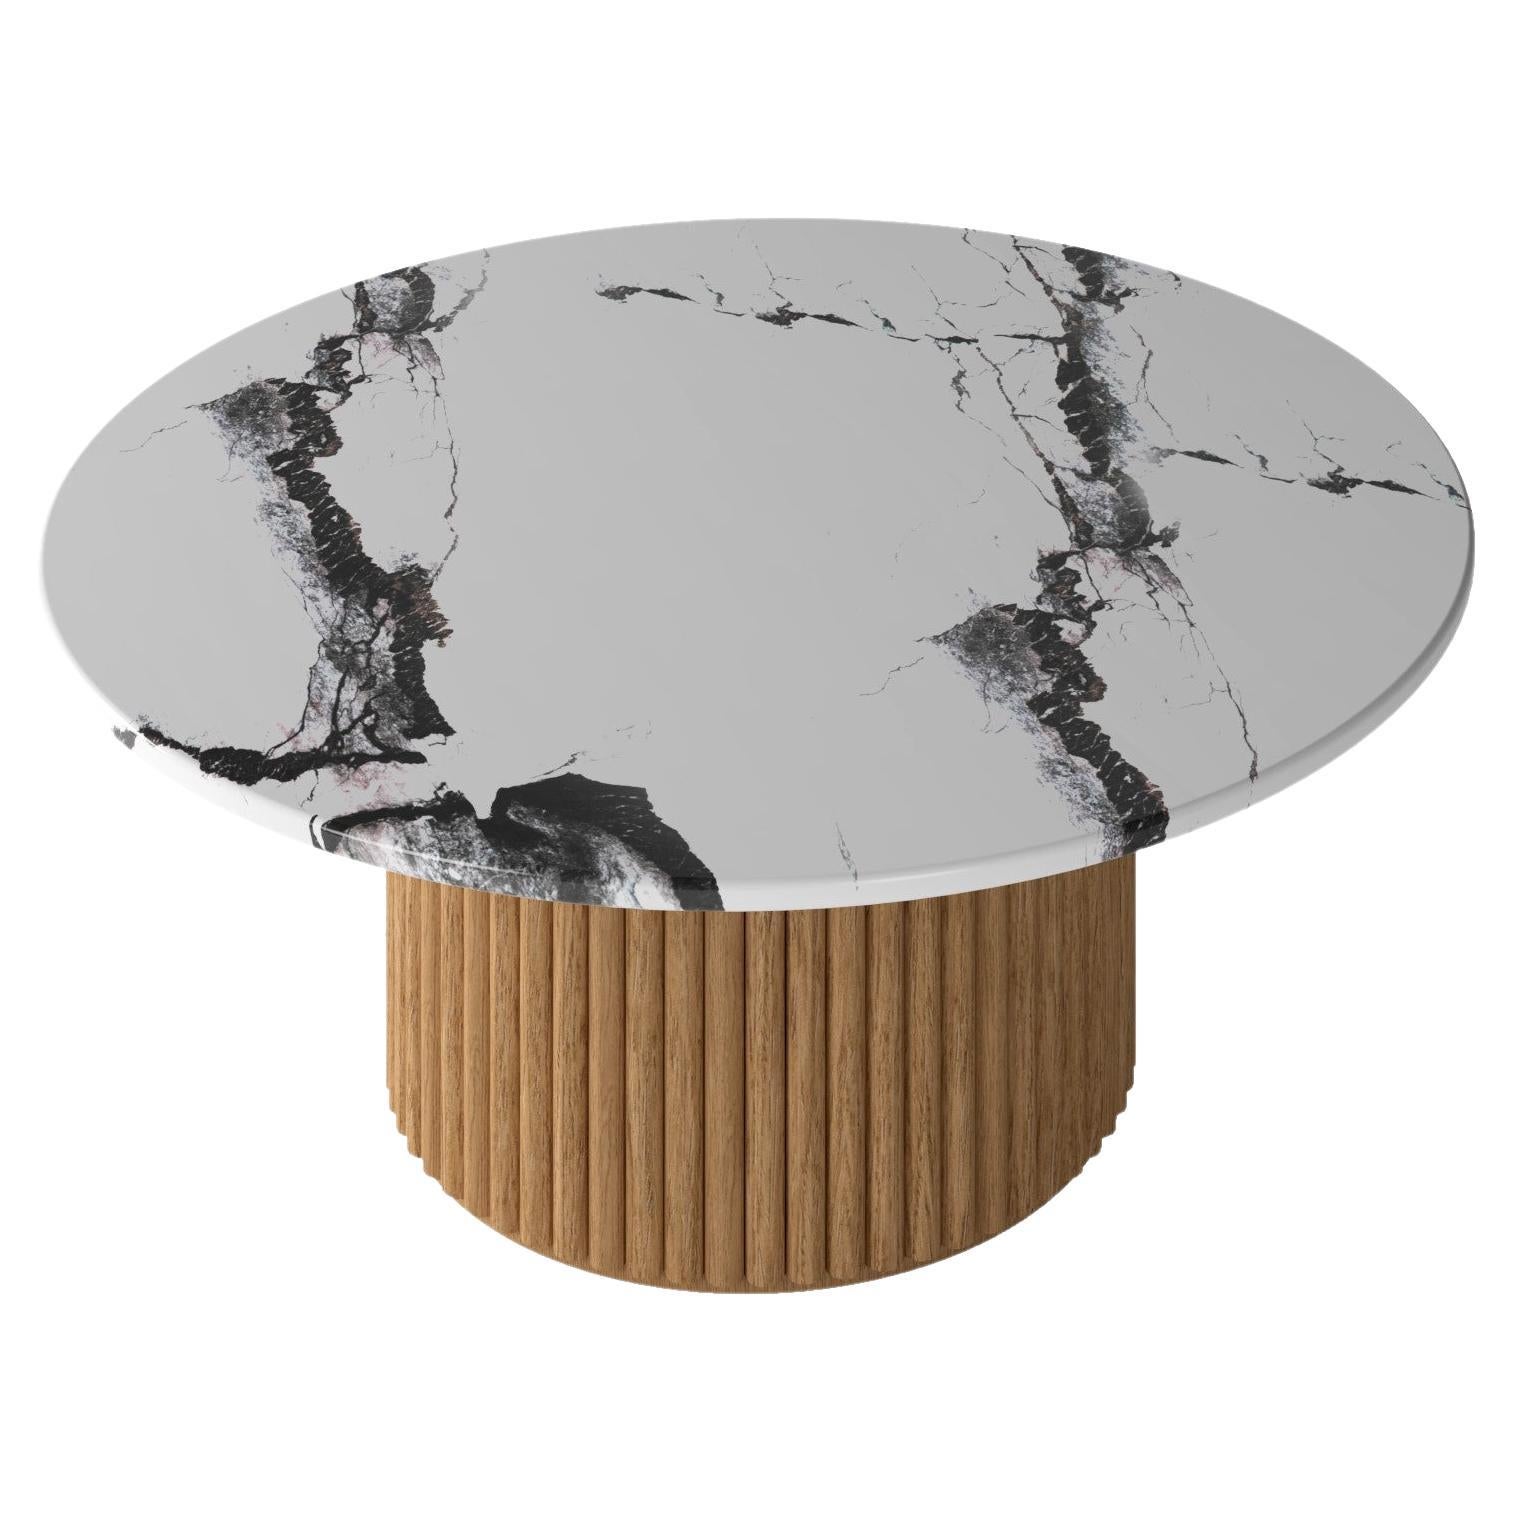 NORDST Mette Coffee Table, Italian White Mountain Marble, Danish Modern Design 